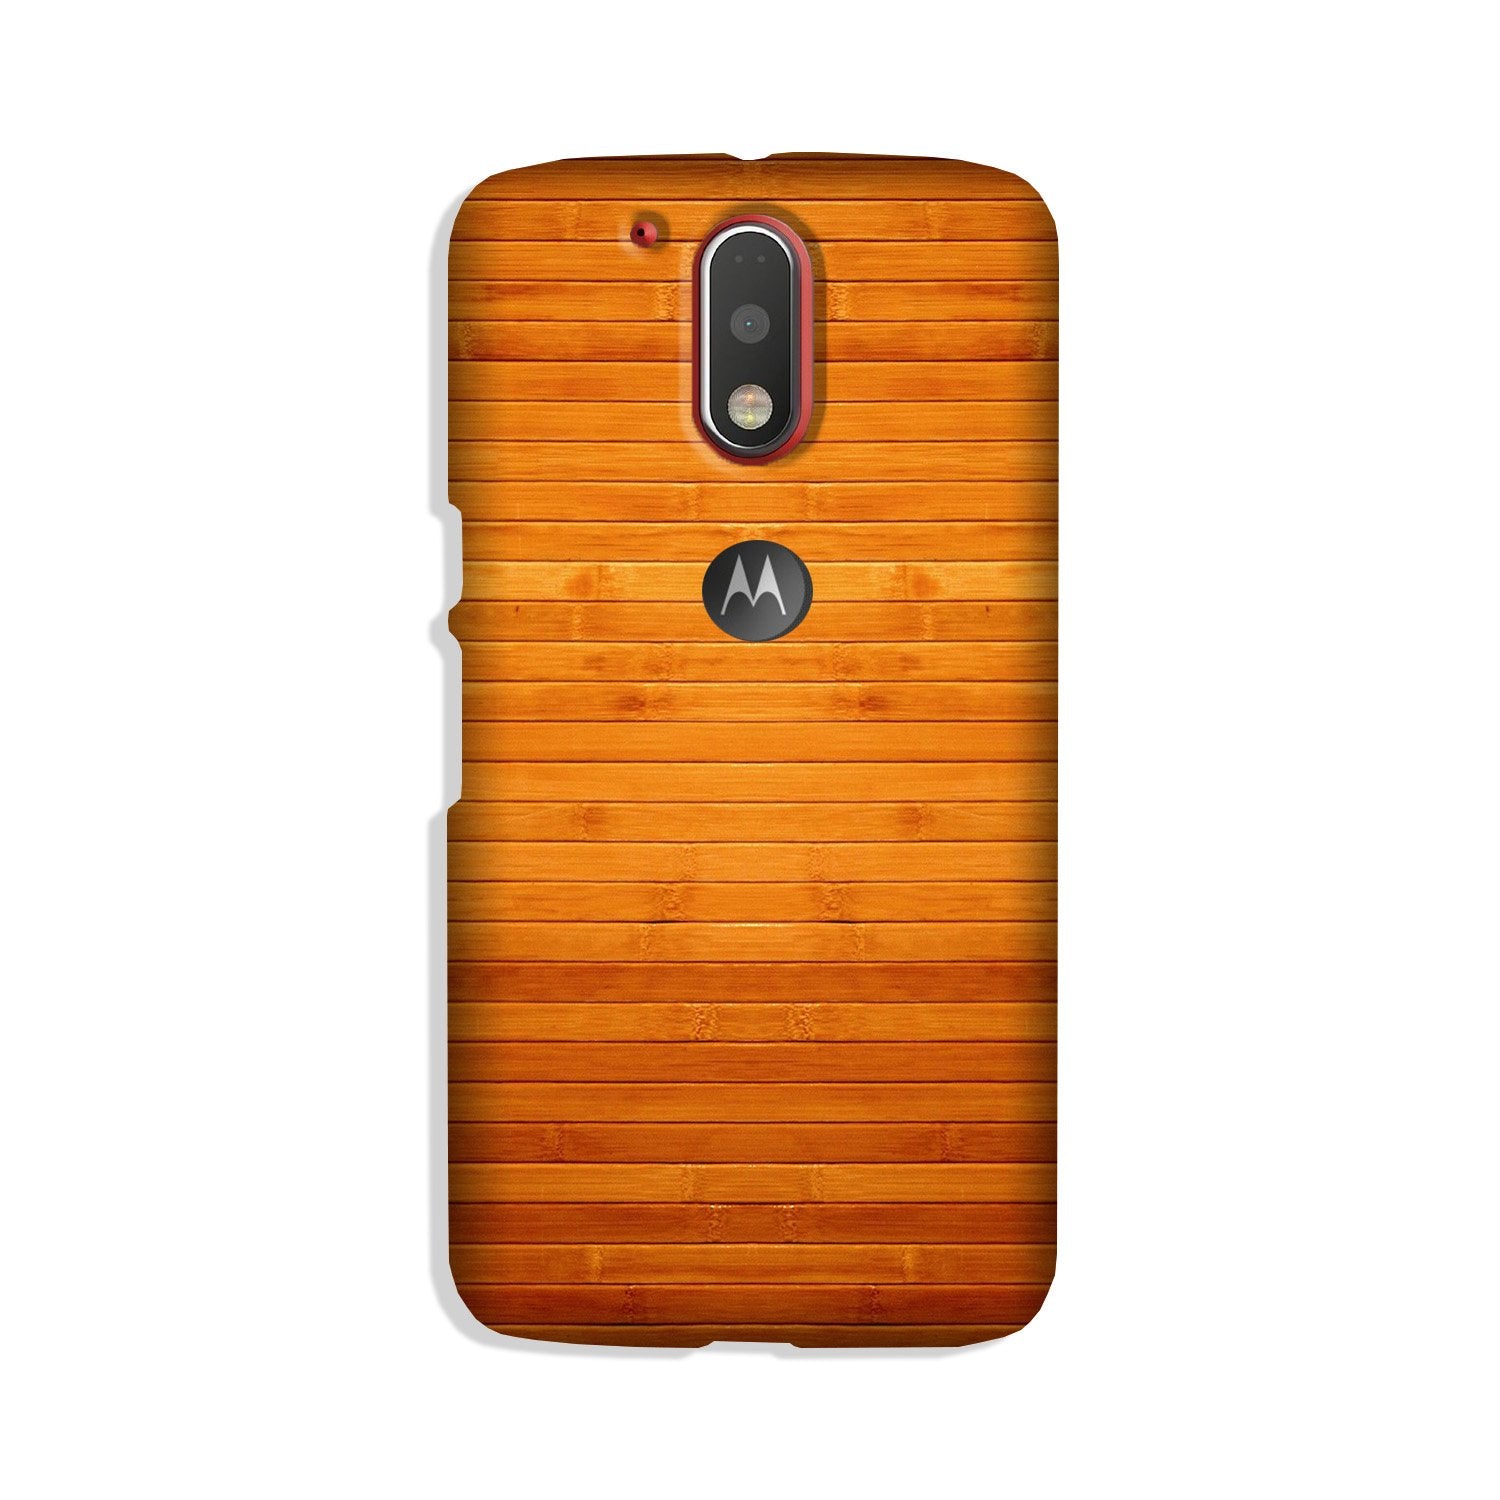 Wooden Look Case for Moto G4 Plus(Design - 111)